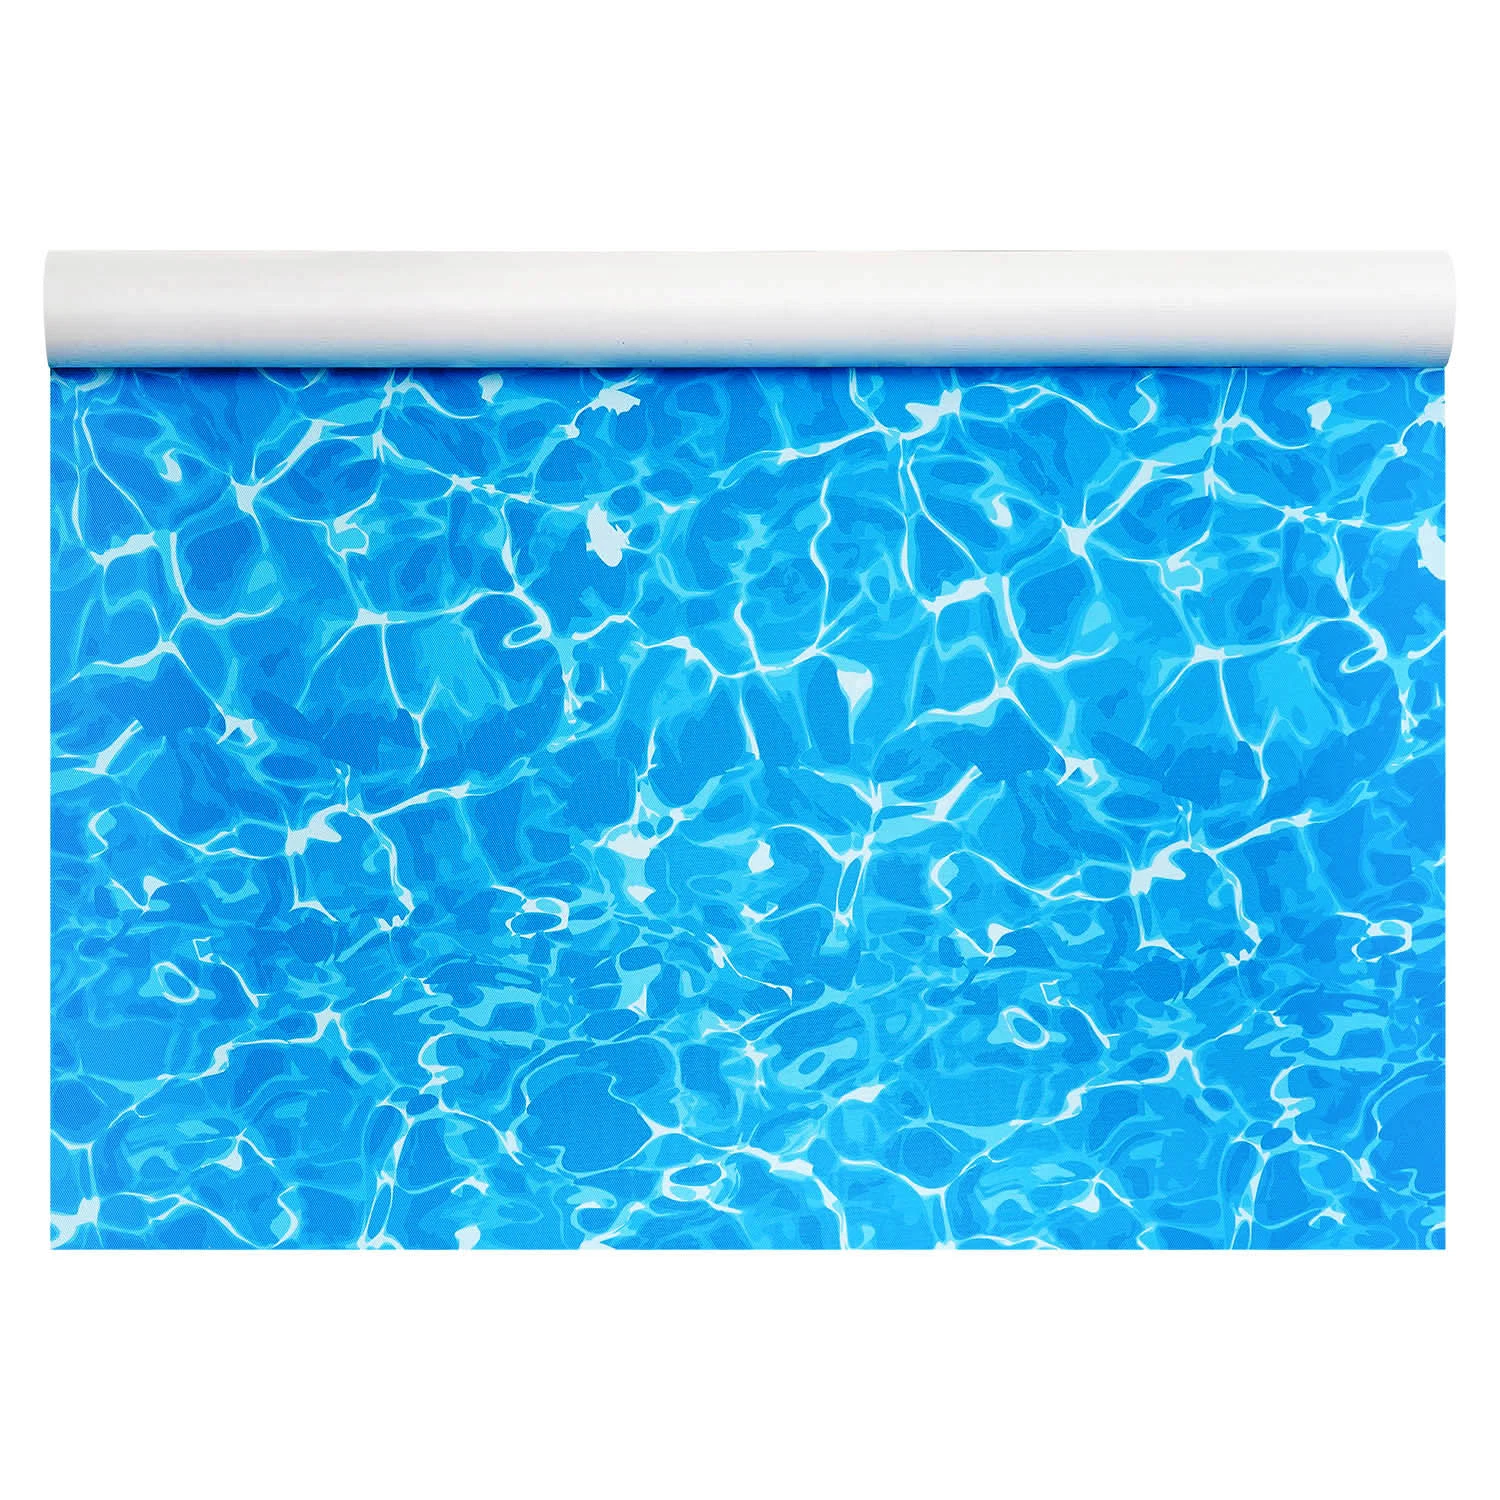 Ripple Anti Slip PVC Adhesive Vinyl Decorating Decoration Film for Swimming Pool Liner